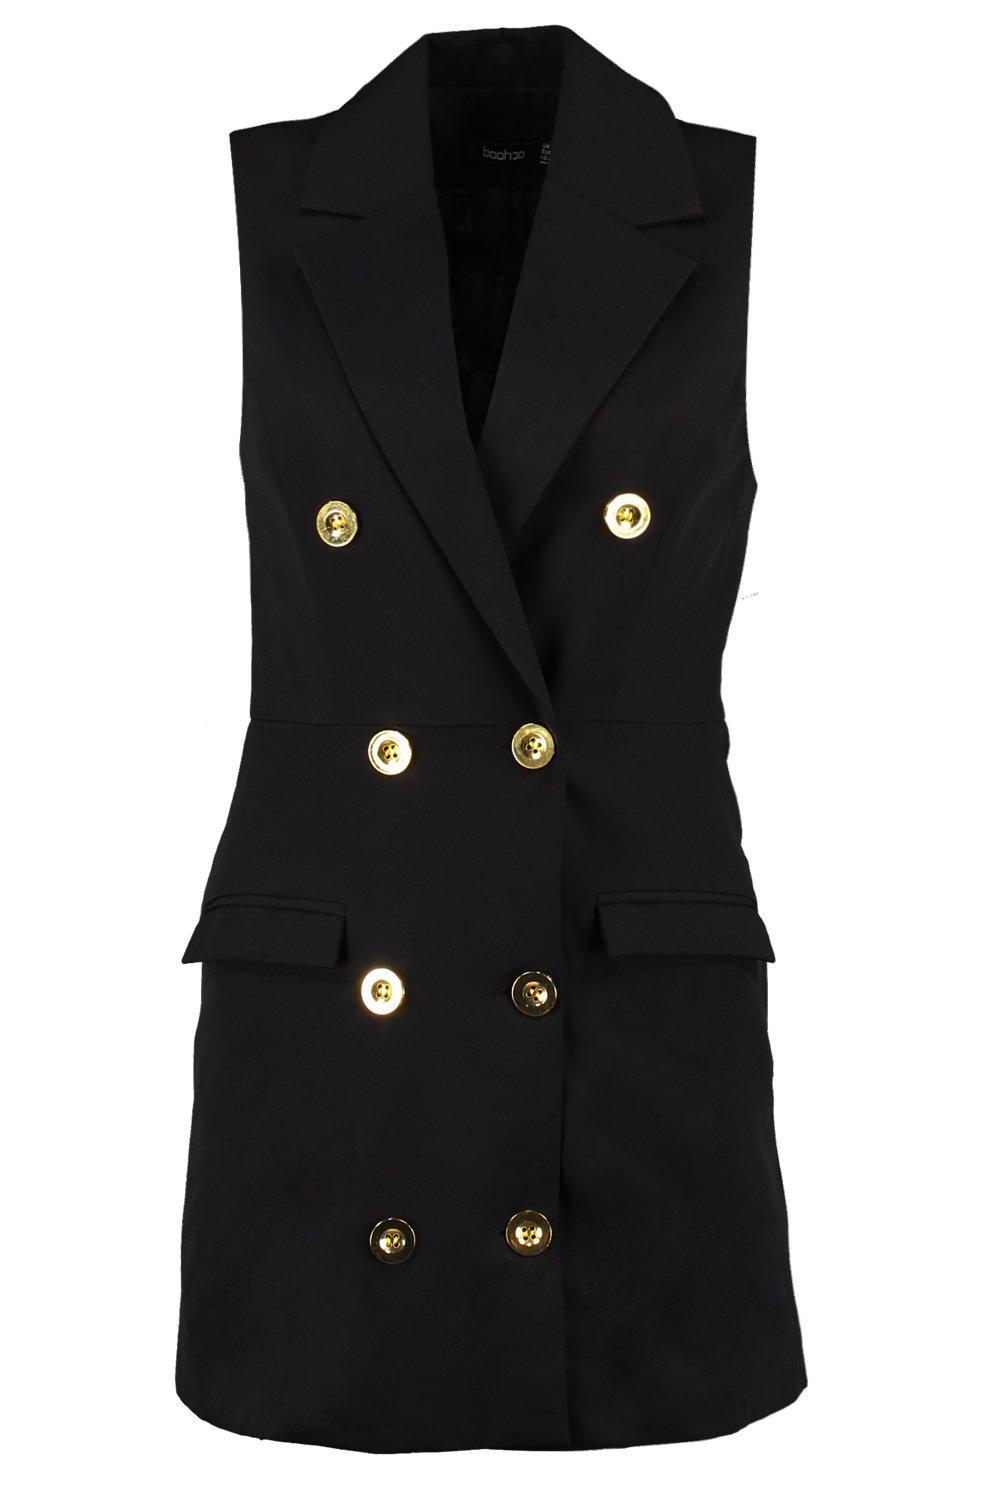 Black Sleeveless Gold Button Detail Blazer Dress